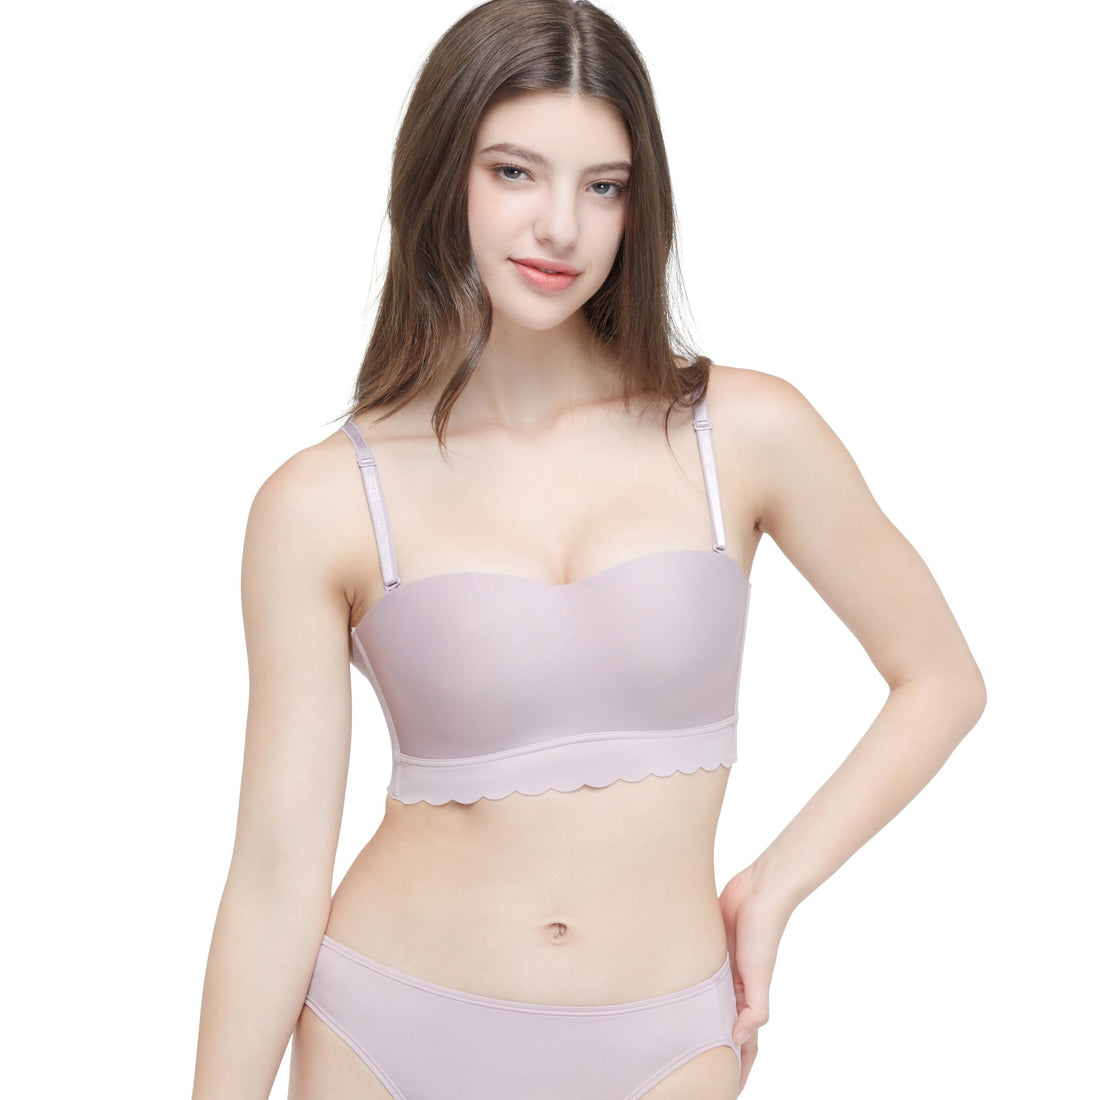 Wacoal Go Girls Smart Size Wavy Top Wacoal strapless bra, comfortable –  Thai Wacoal Public Company Limited